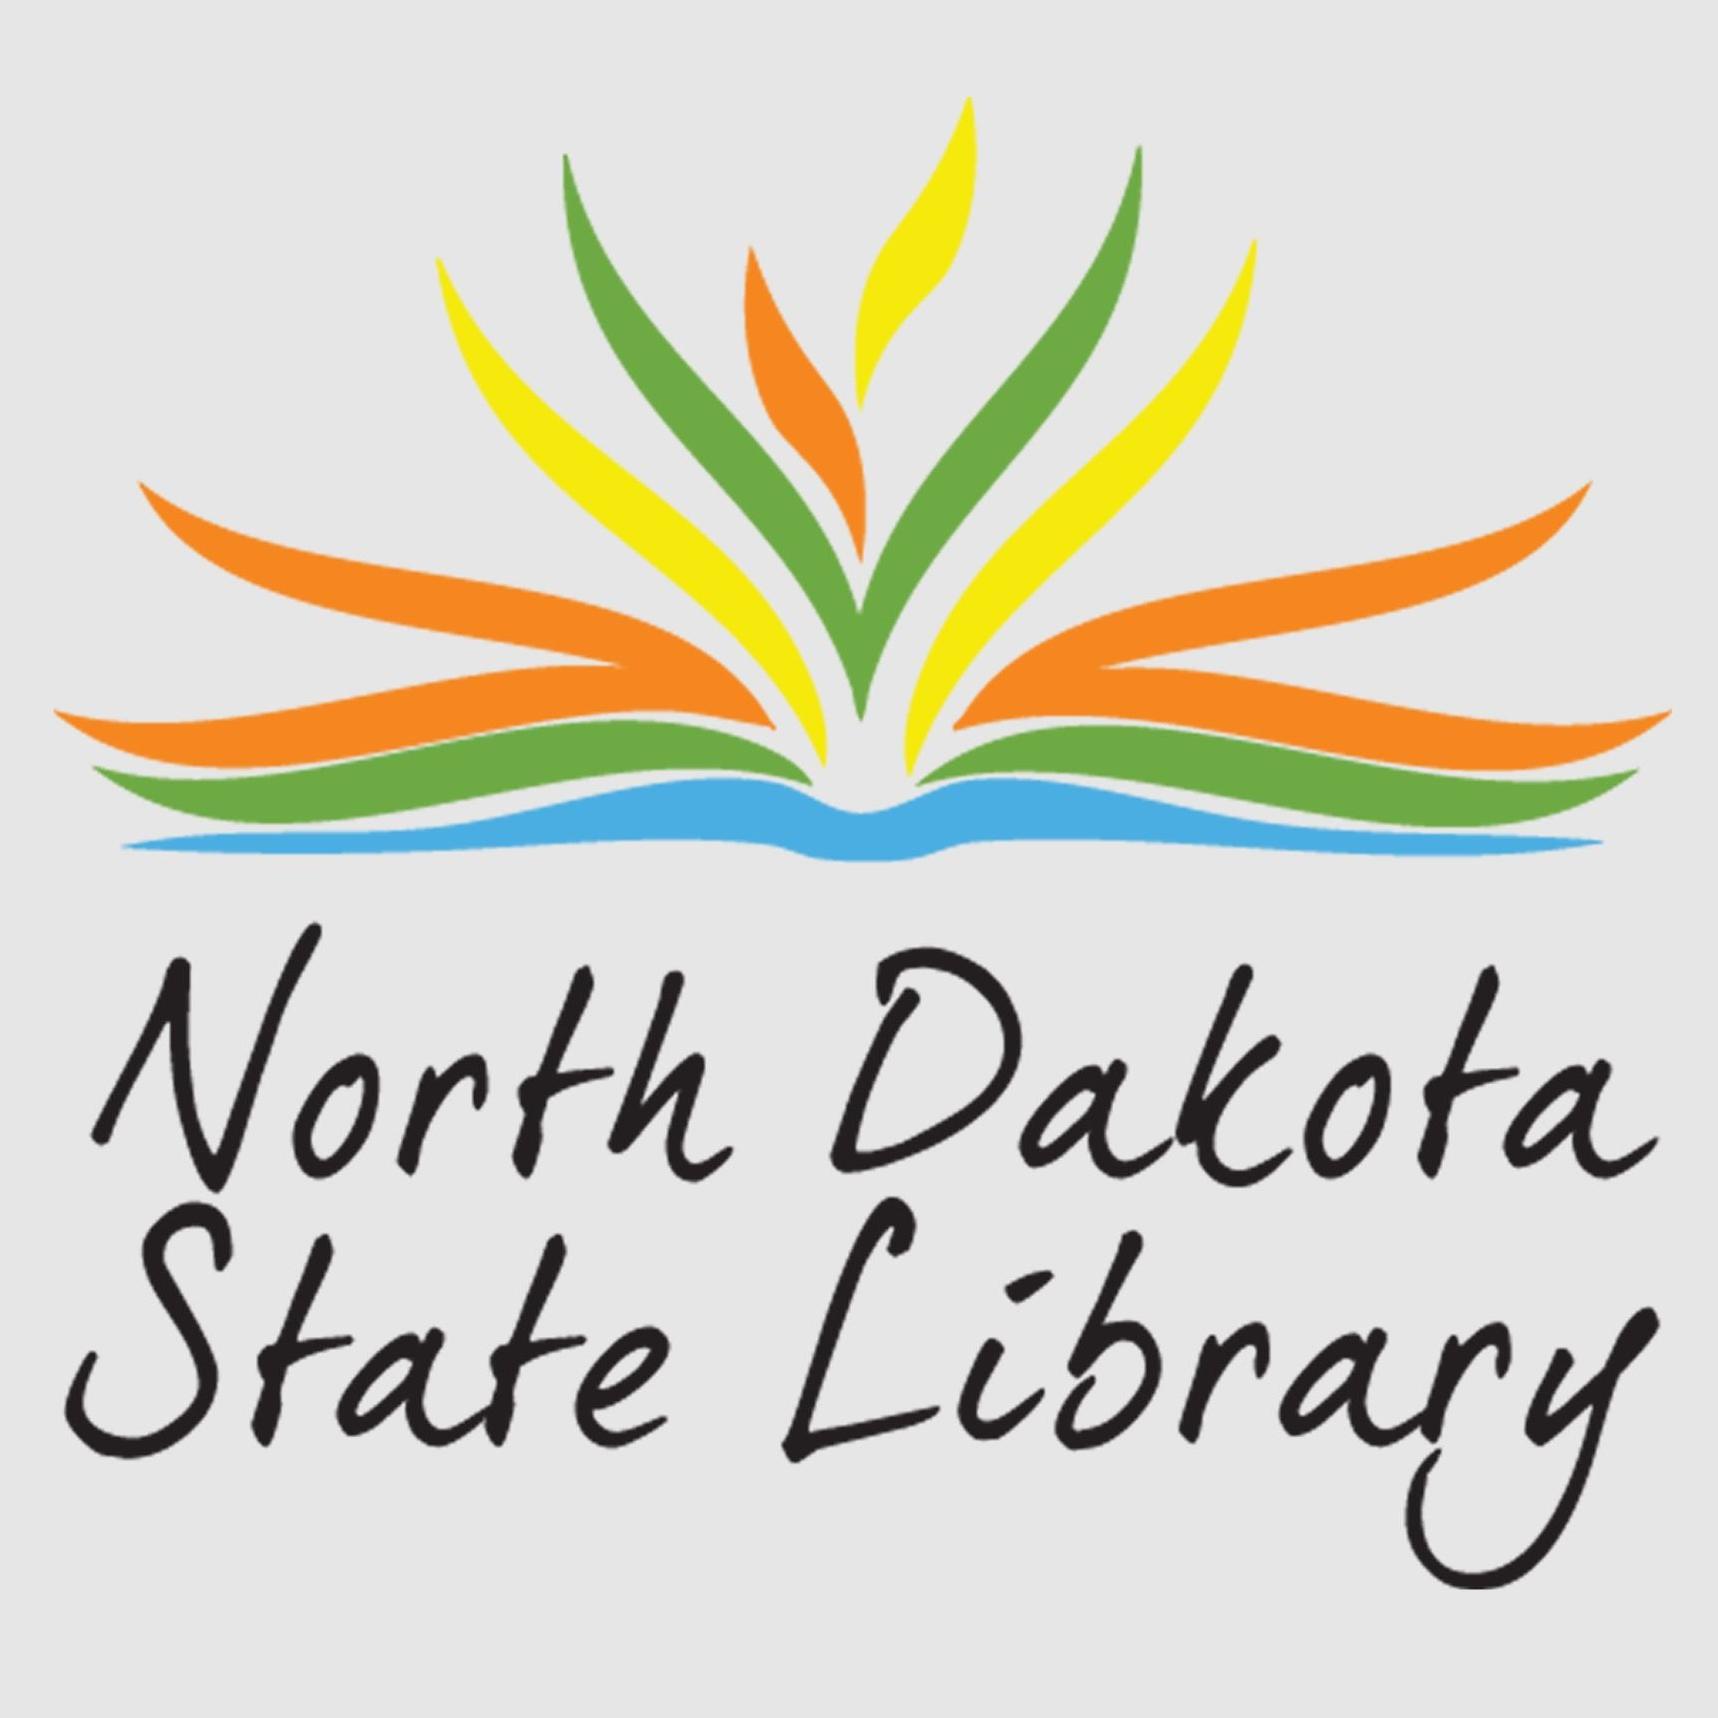 The North Dakota State Library wordmark and logo.